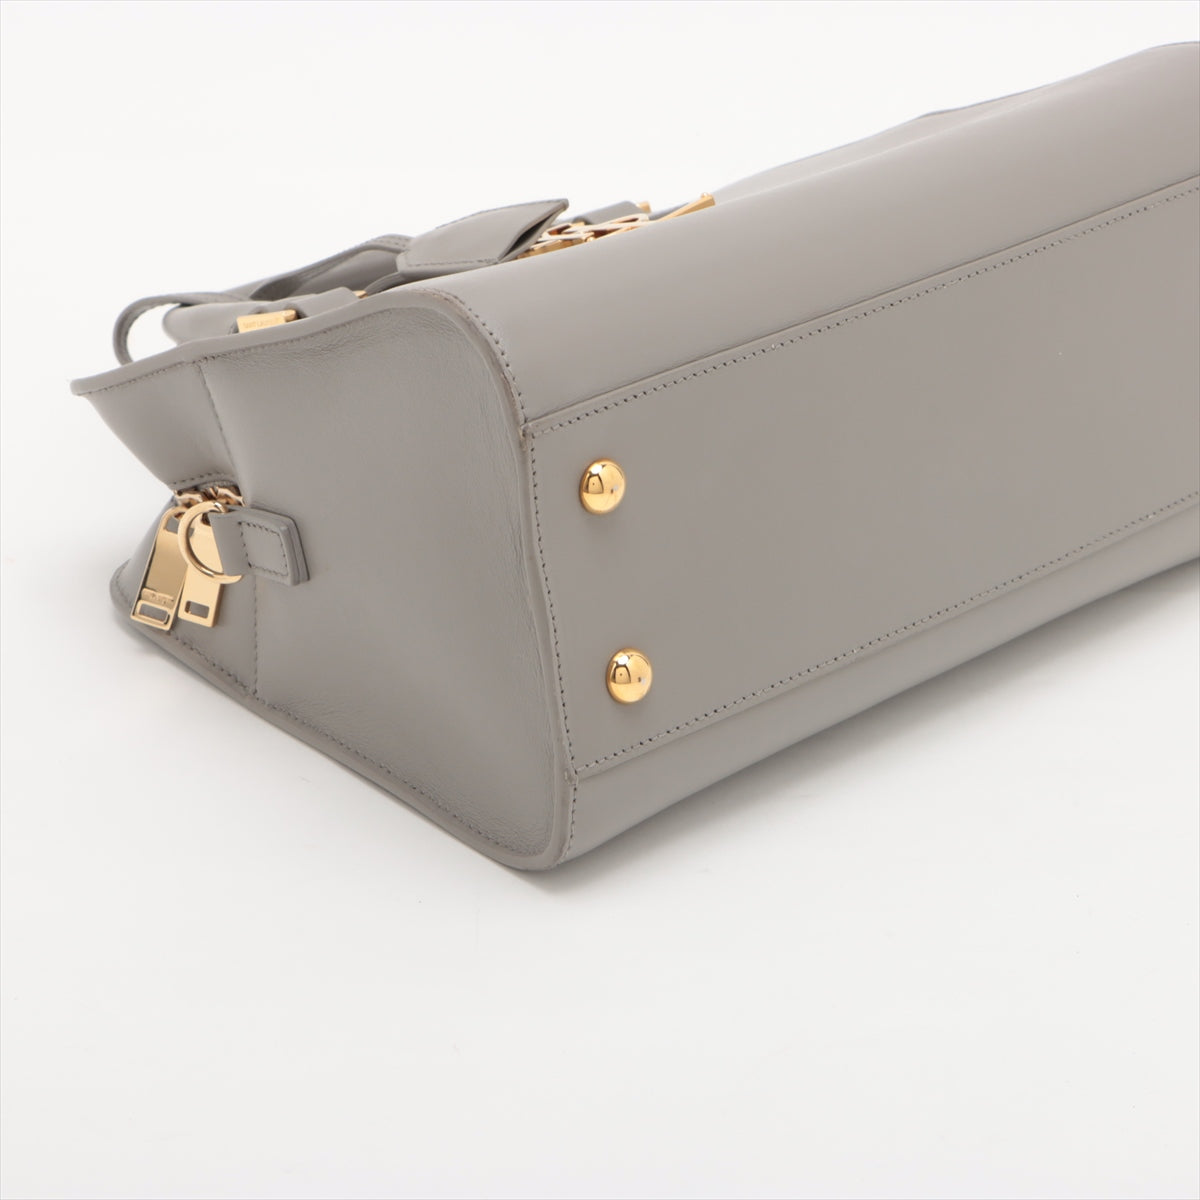 Saint Laurent Paris Navy Cabas Leather 2way handbag Grey 568853